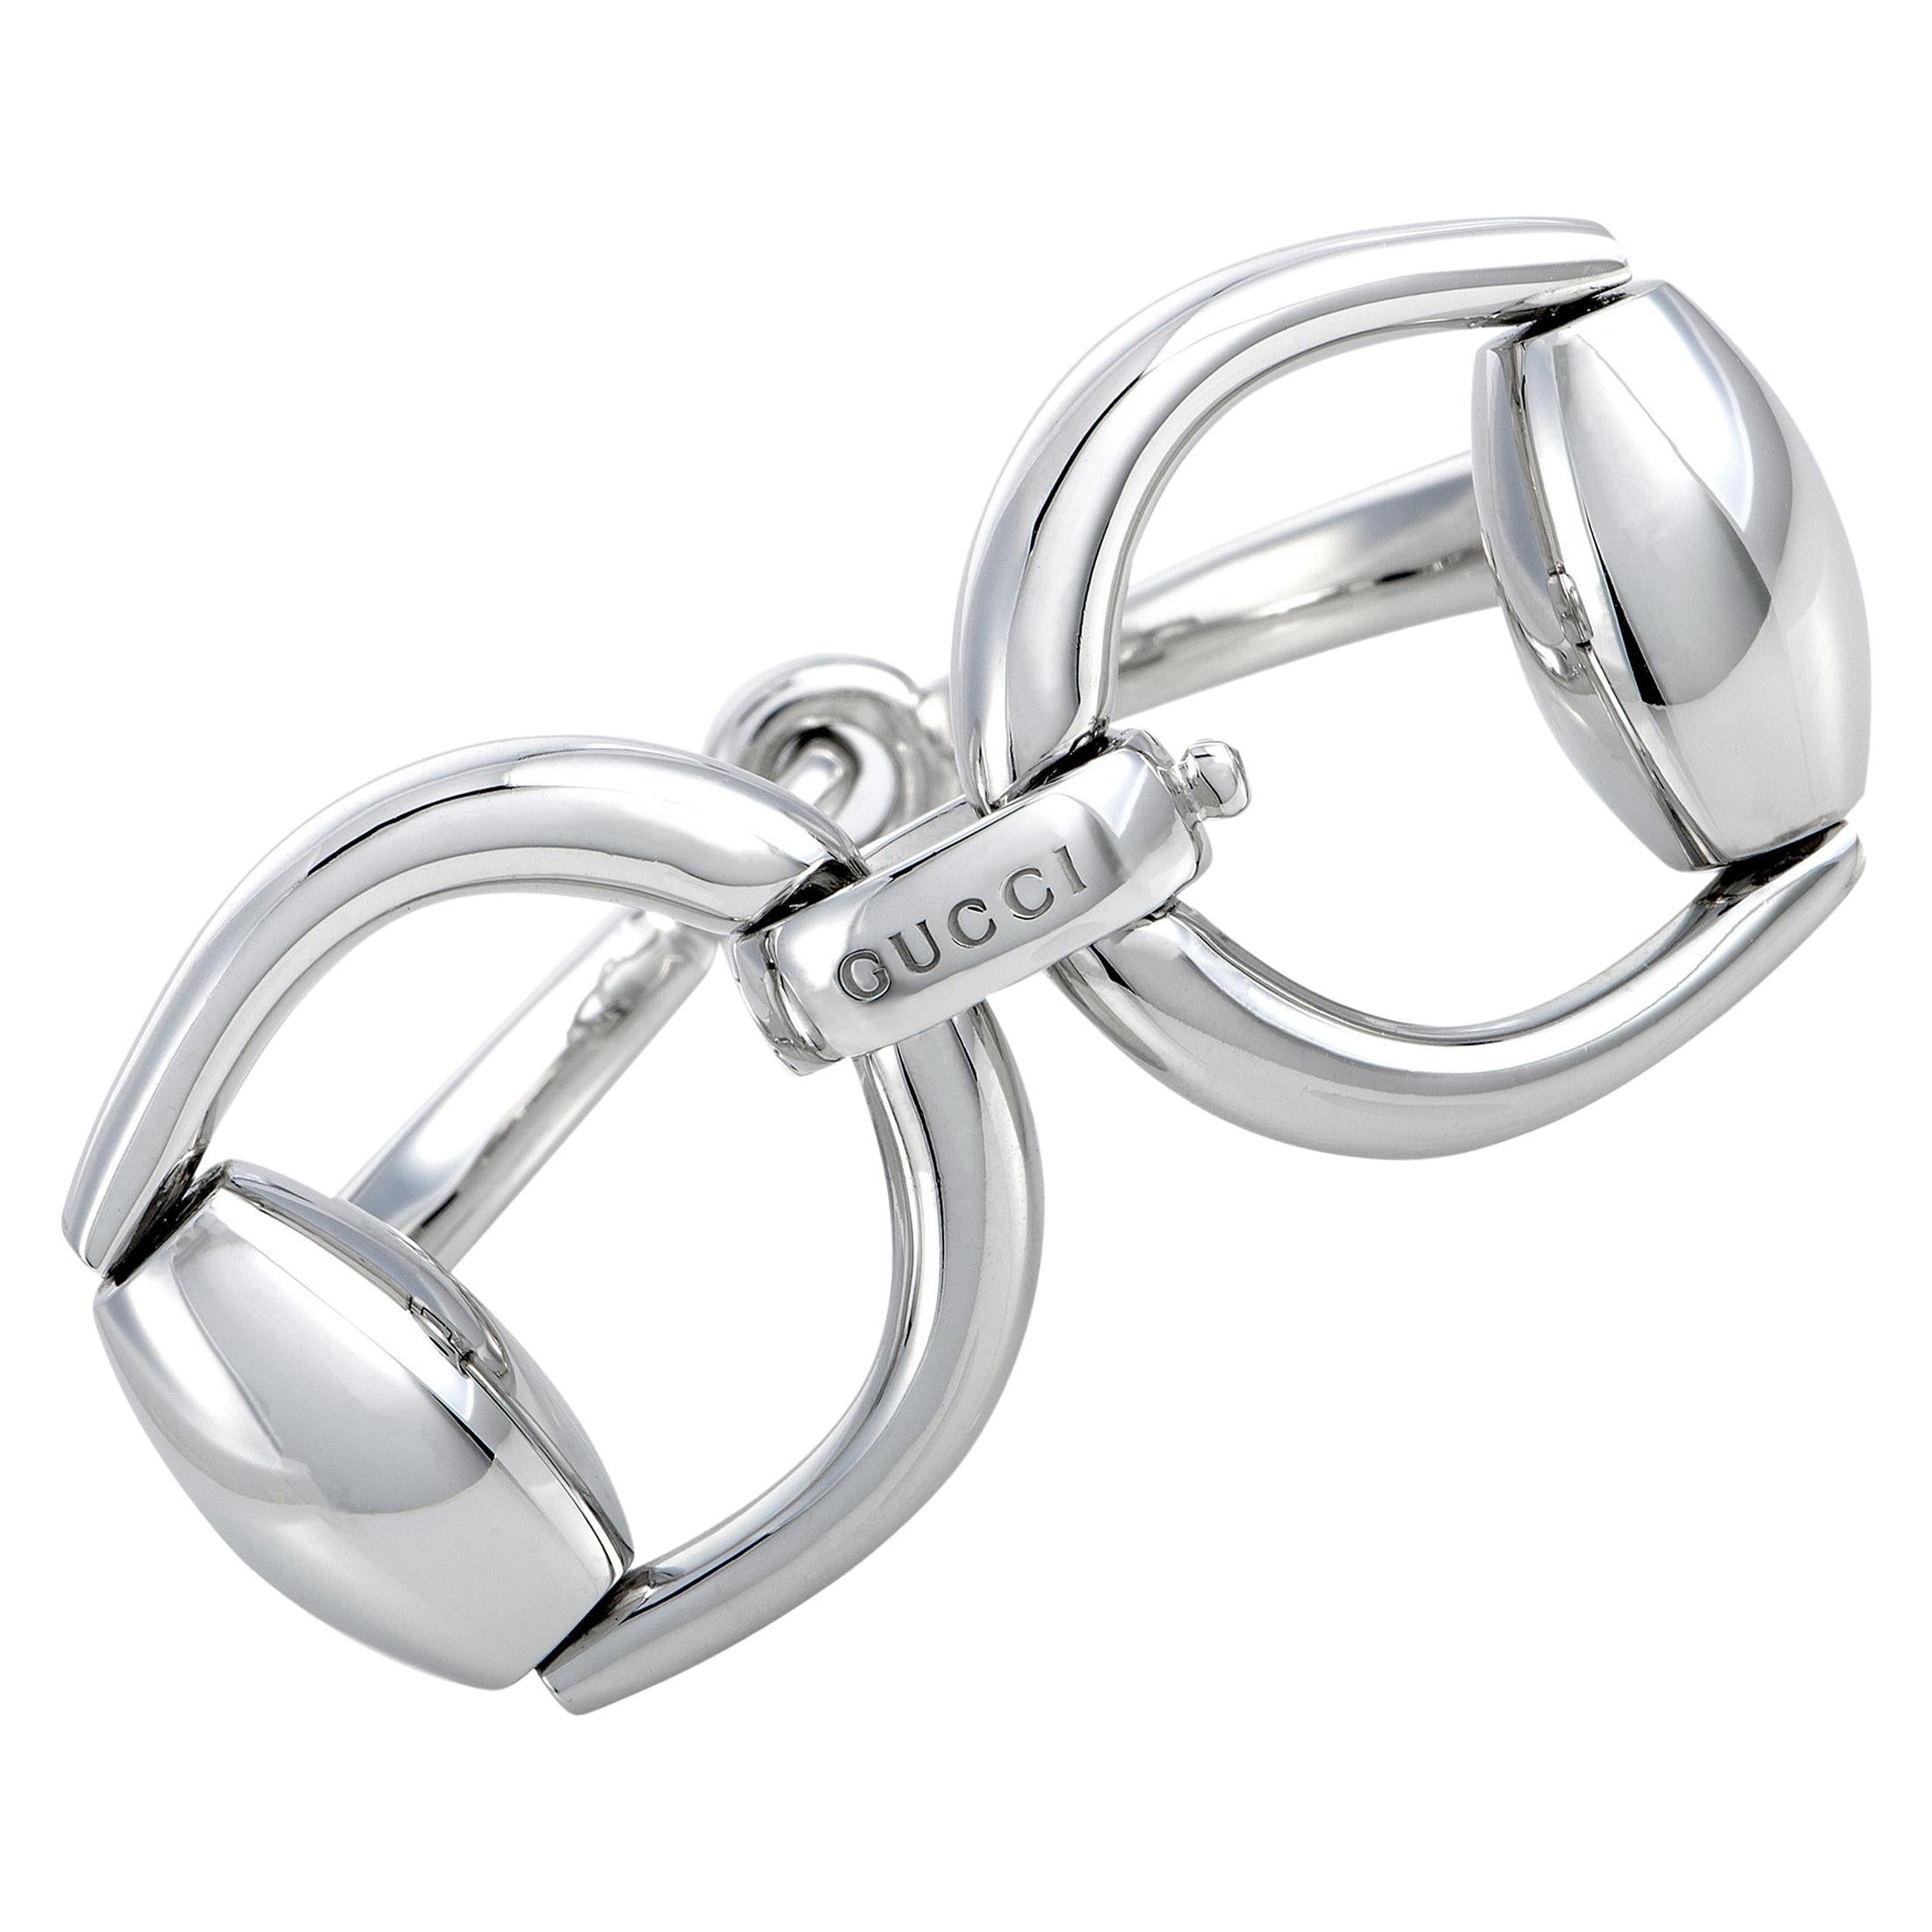 gucci horsebit bracelet silver